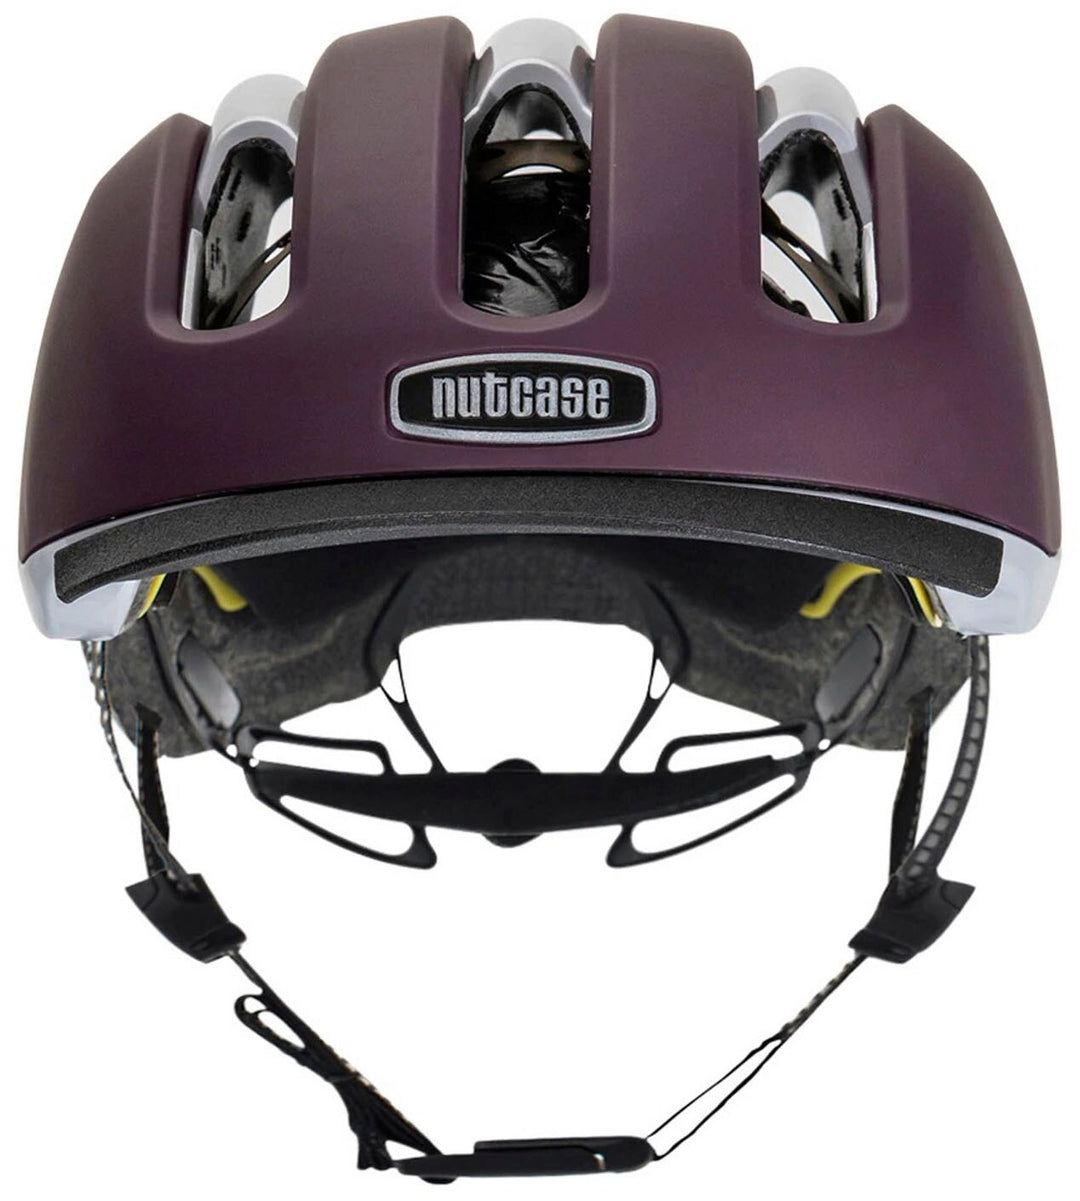 Nutcase - Vio Adventure Helmet with MIPS - Plum_1